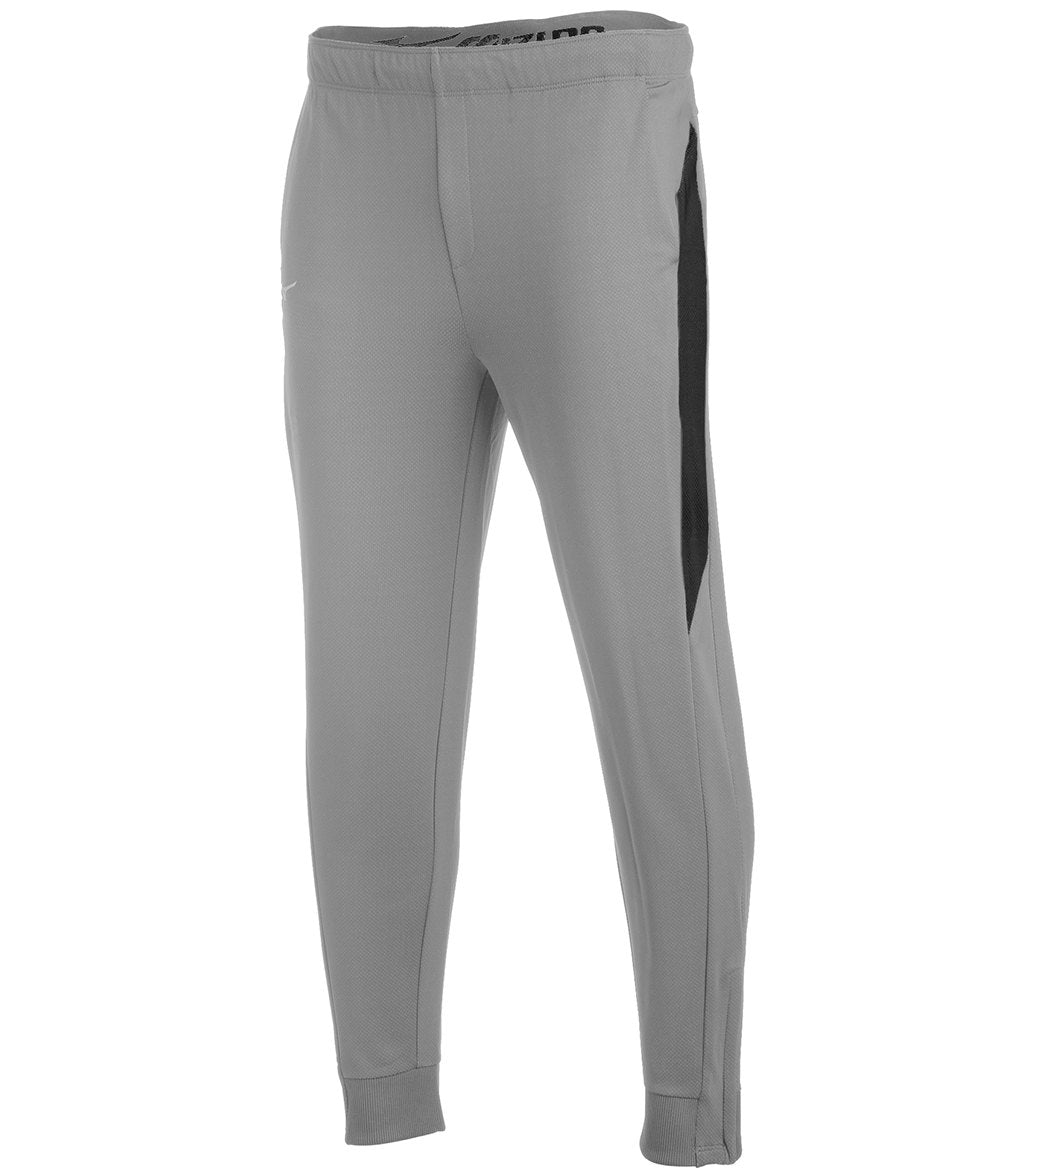 Mizuno Men's Elite Training Pants - Grey-Black Large Grey/Black Cotton/Polyester - Swimoutlet.com